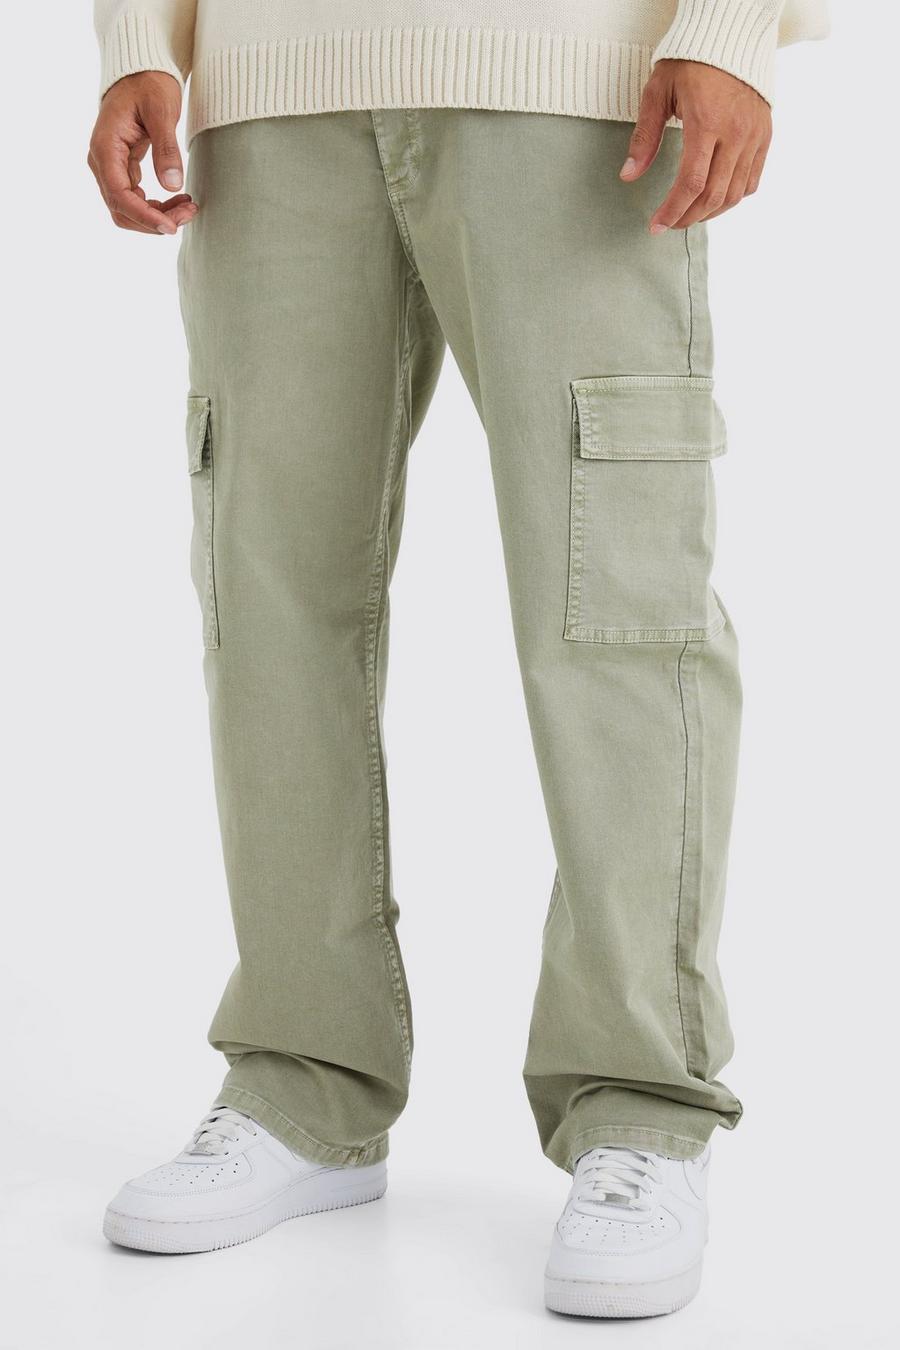 Orvis Mens O.O.O.O 5-Pocket Pants 36x29 Green Active Fit Chino Water  Repellent